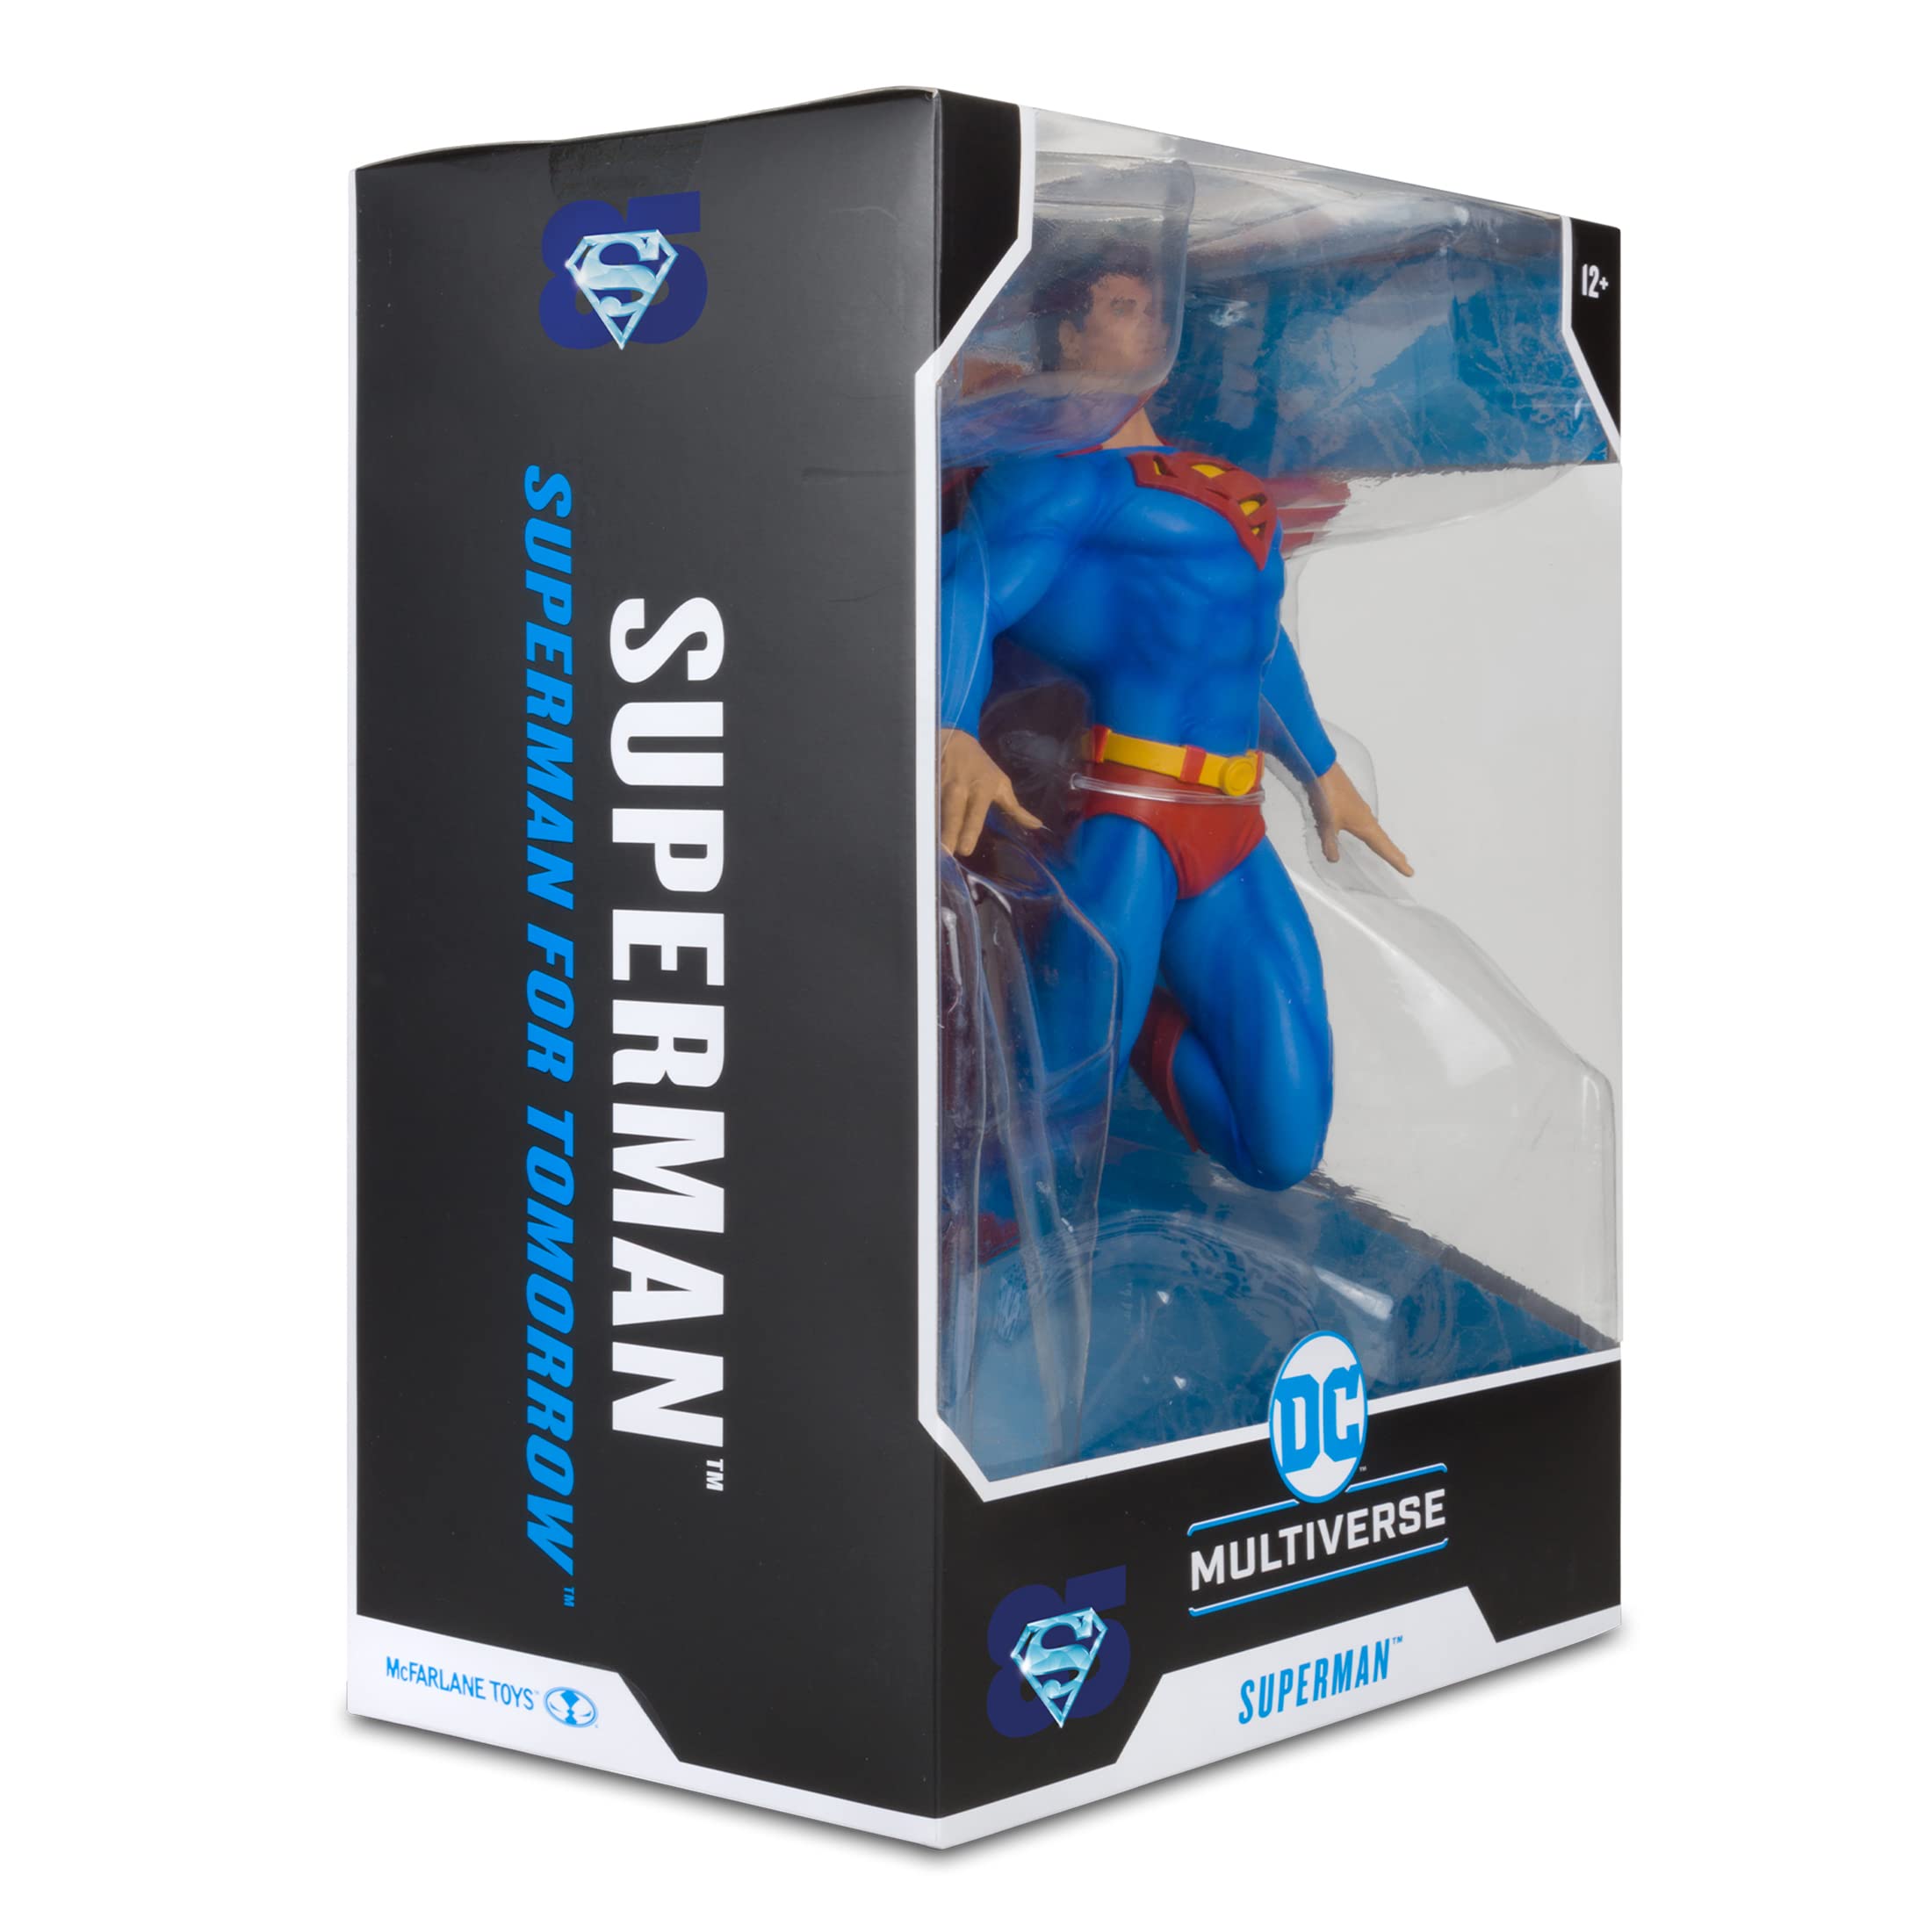 McFarlane - DC Multiverse - Superman for Tomorrow 12